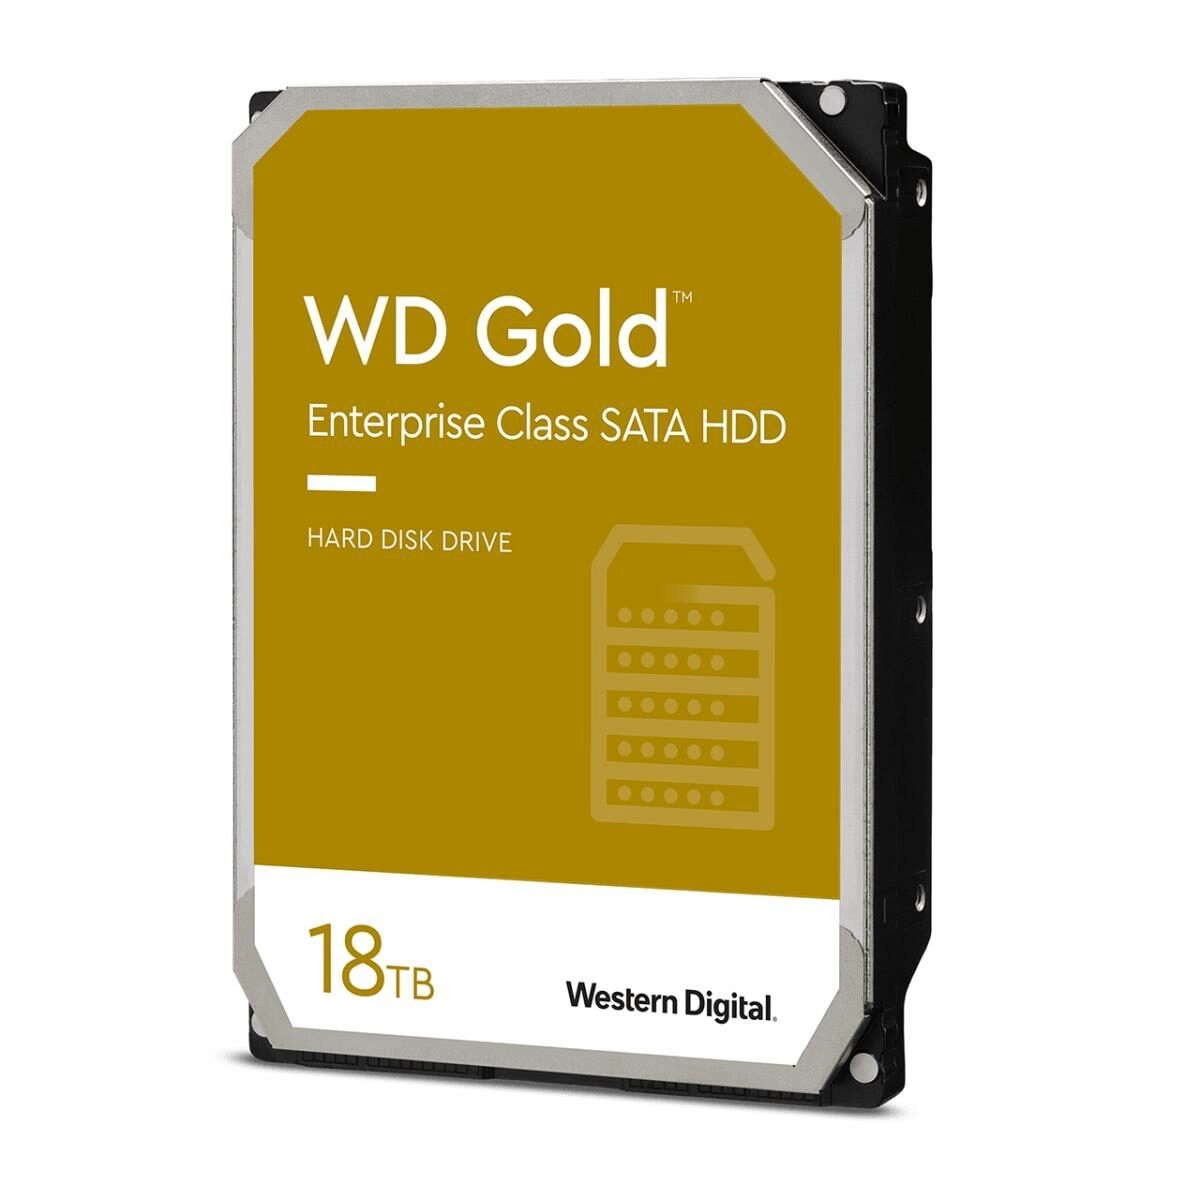 Western Digital Gold Enterprise Class SATA HDD